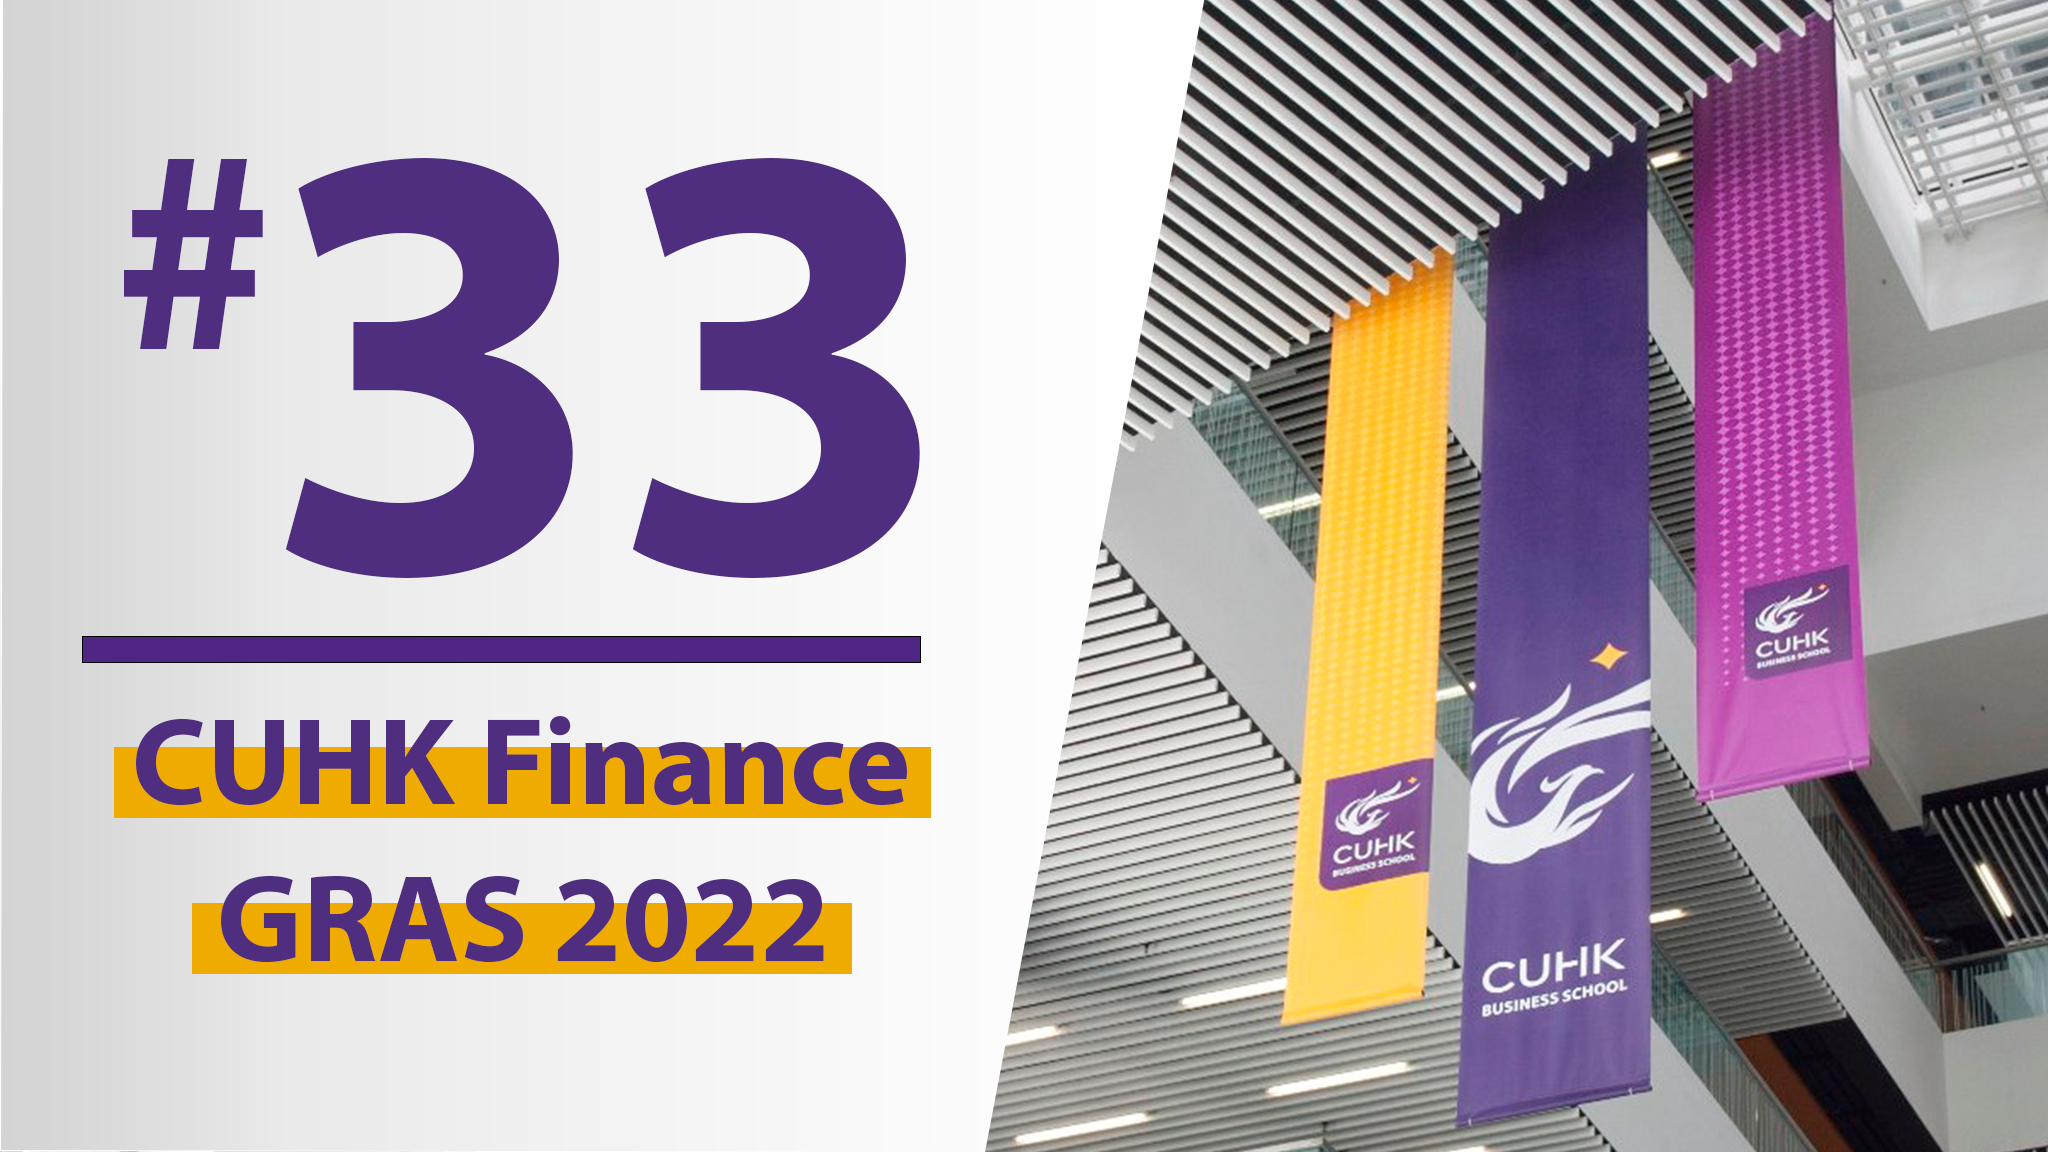 CUHK Finance GRAS Ranking 2022